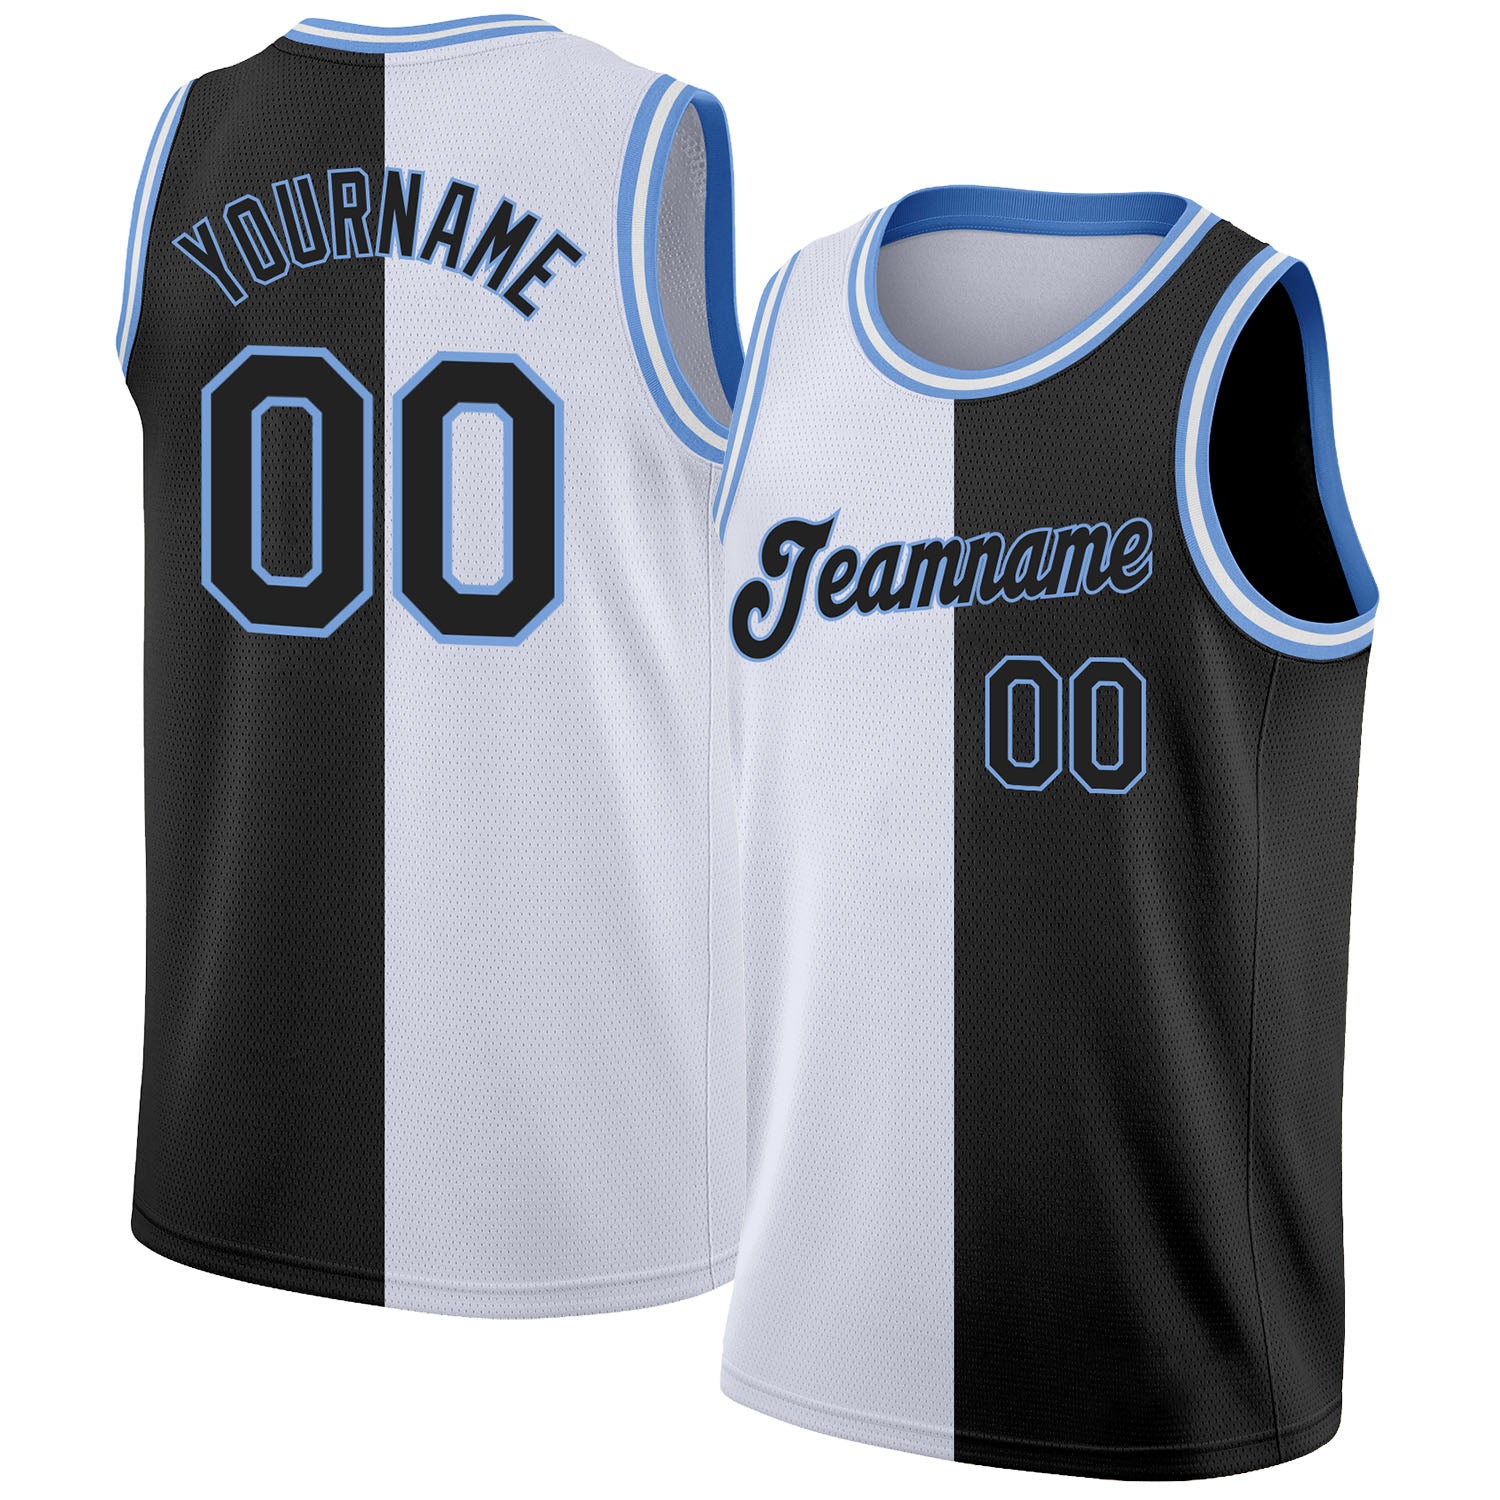 FIITG Custom Basketball Jersey White Black Authentic Throwback Men's Size:3XL